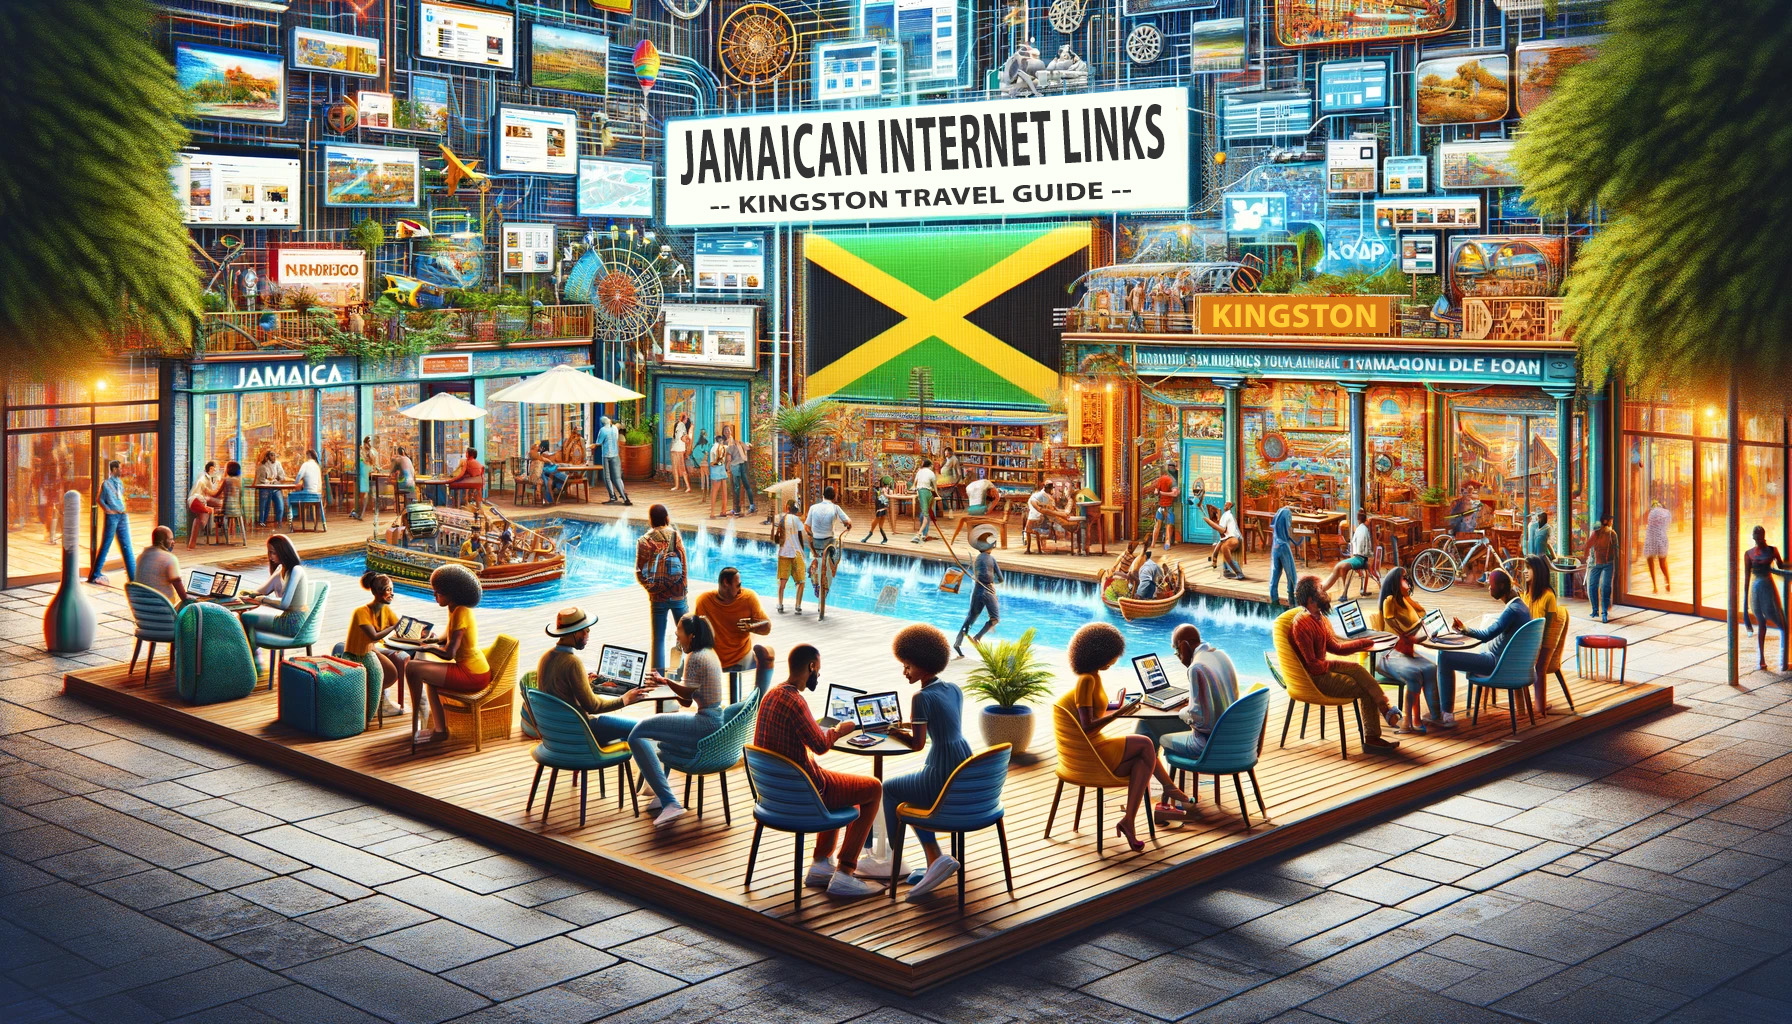 Jamaican Internet Links - Kingston Travel Guide